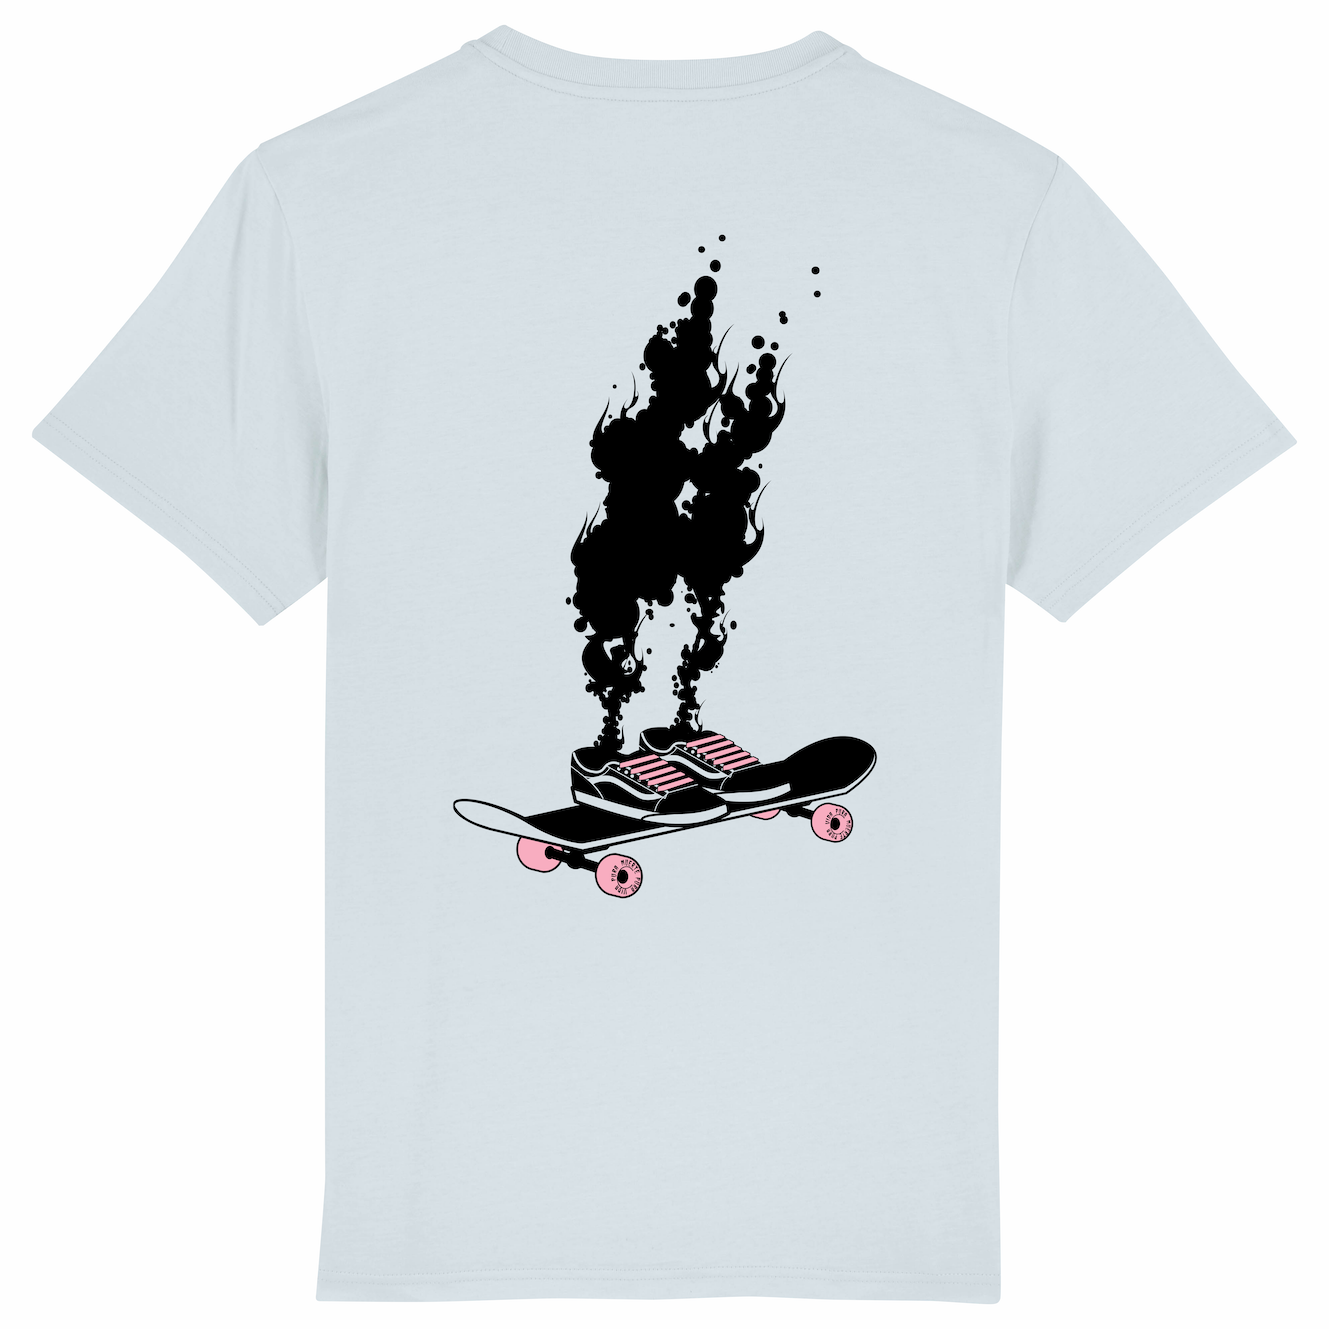 Skate T-shirt men, blue, Spontaneous combustion